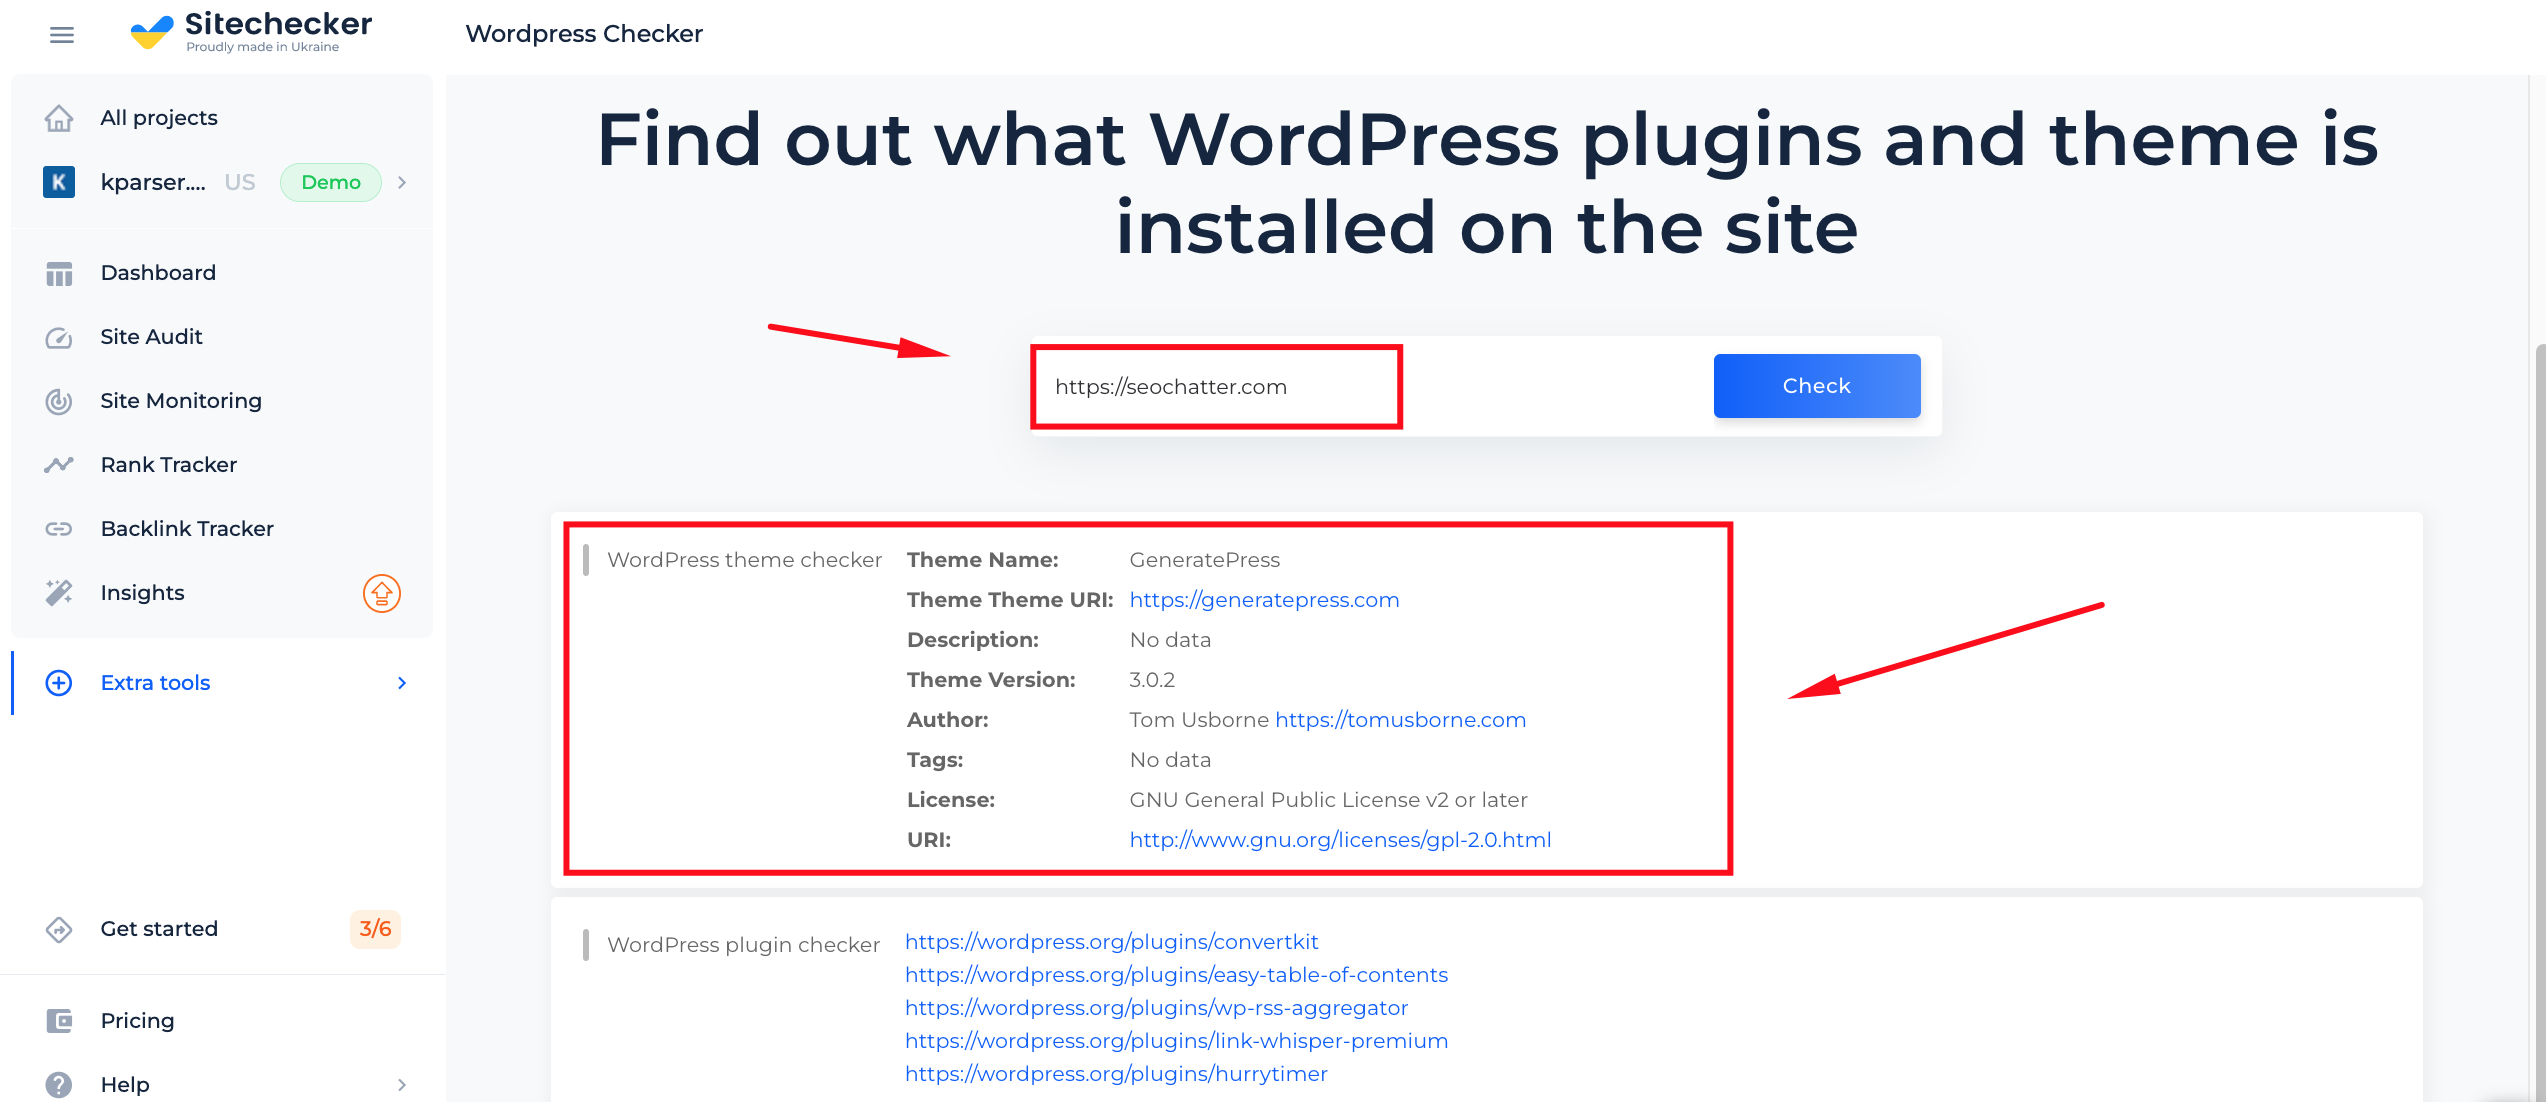 wordpress plugin checker add features